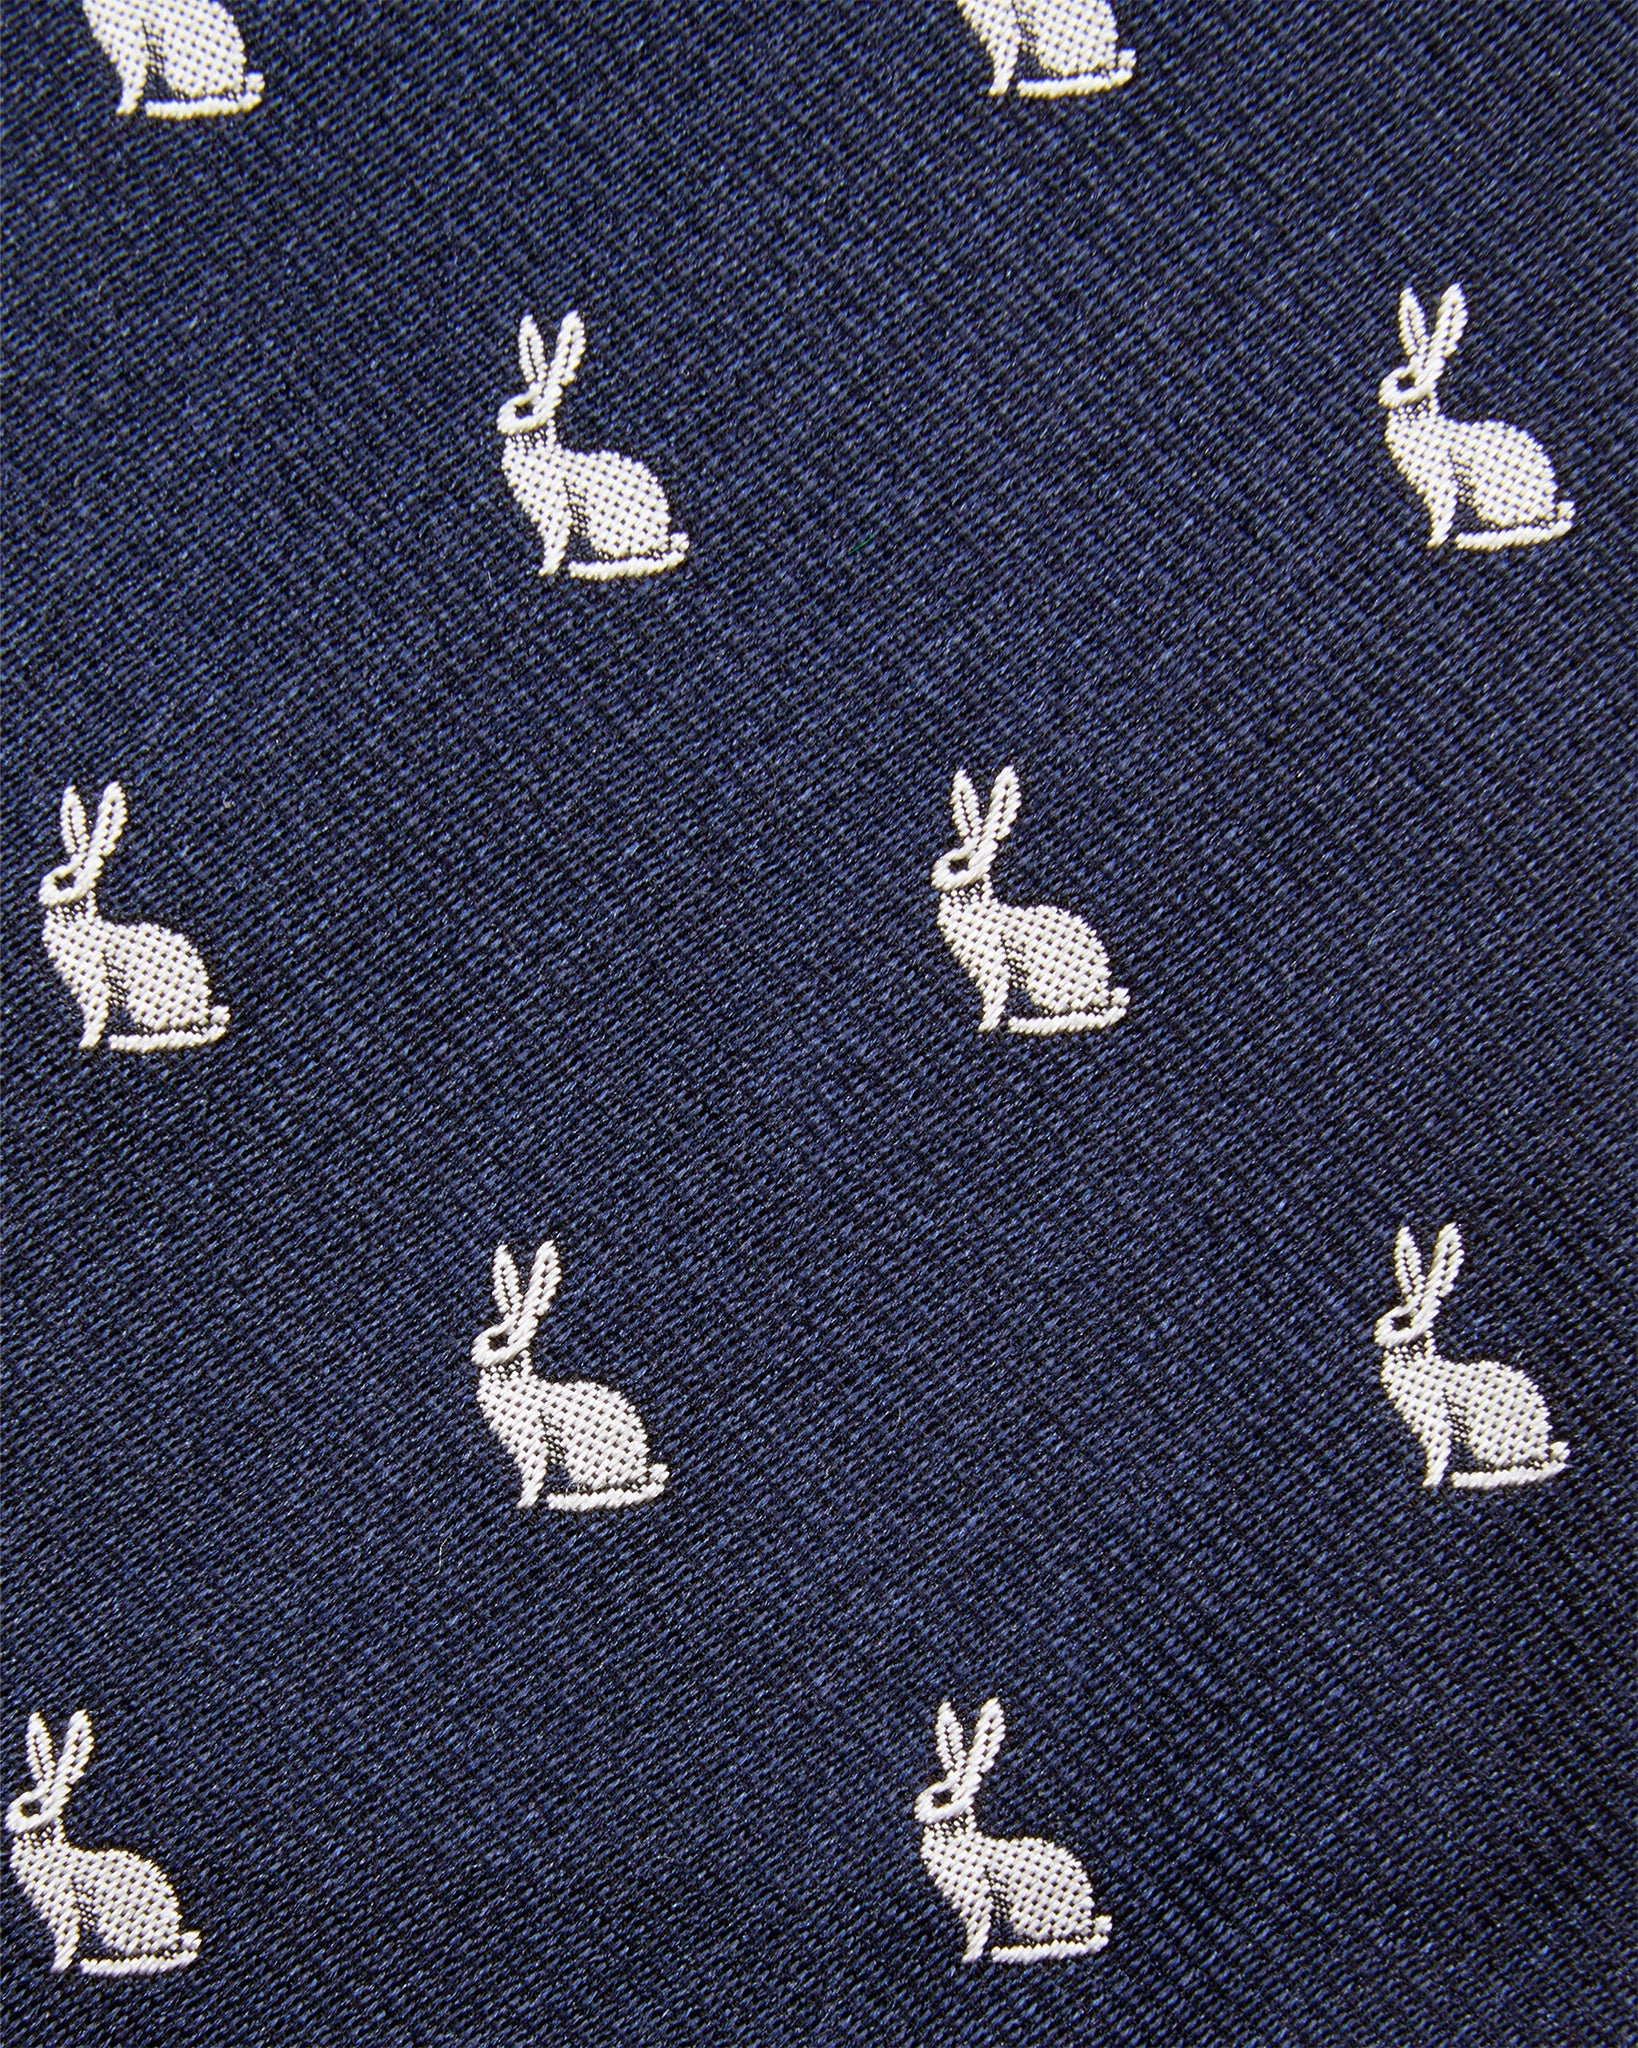 Silk Faille Club Tie in Navy/White Hare